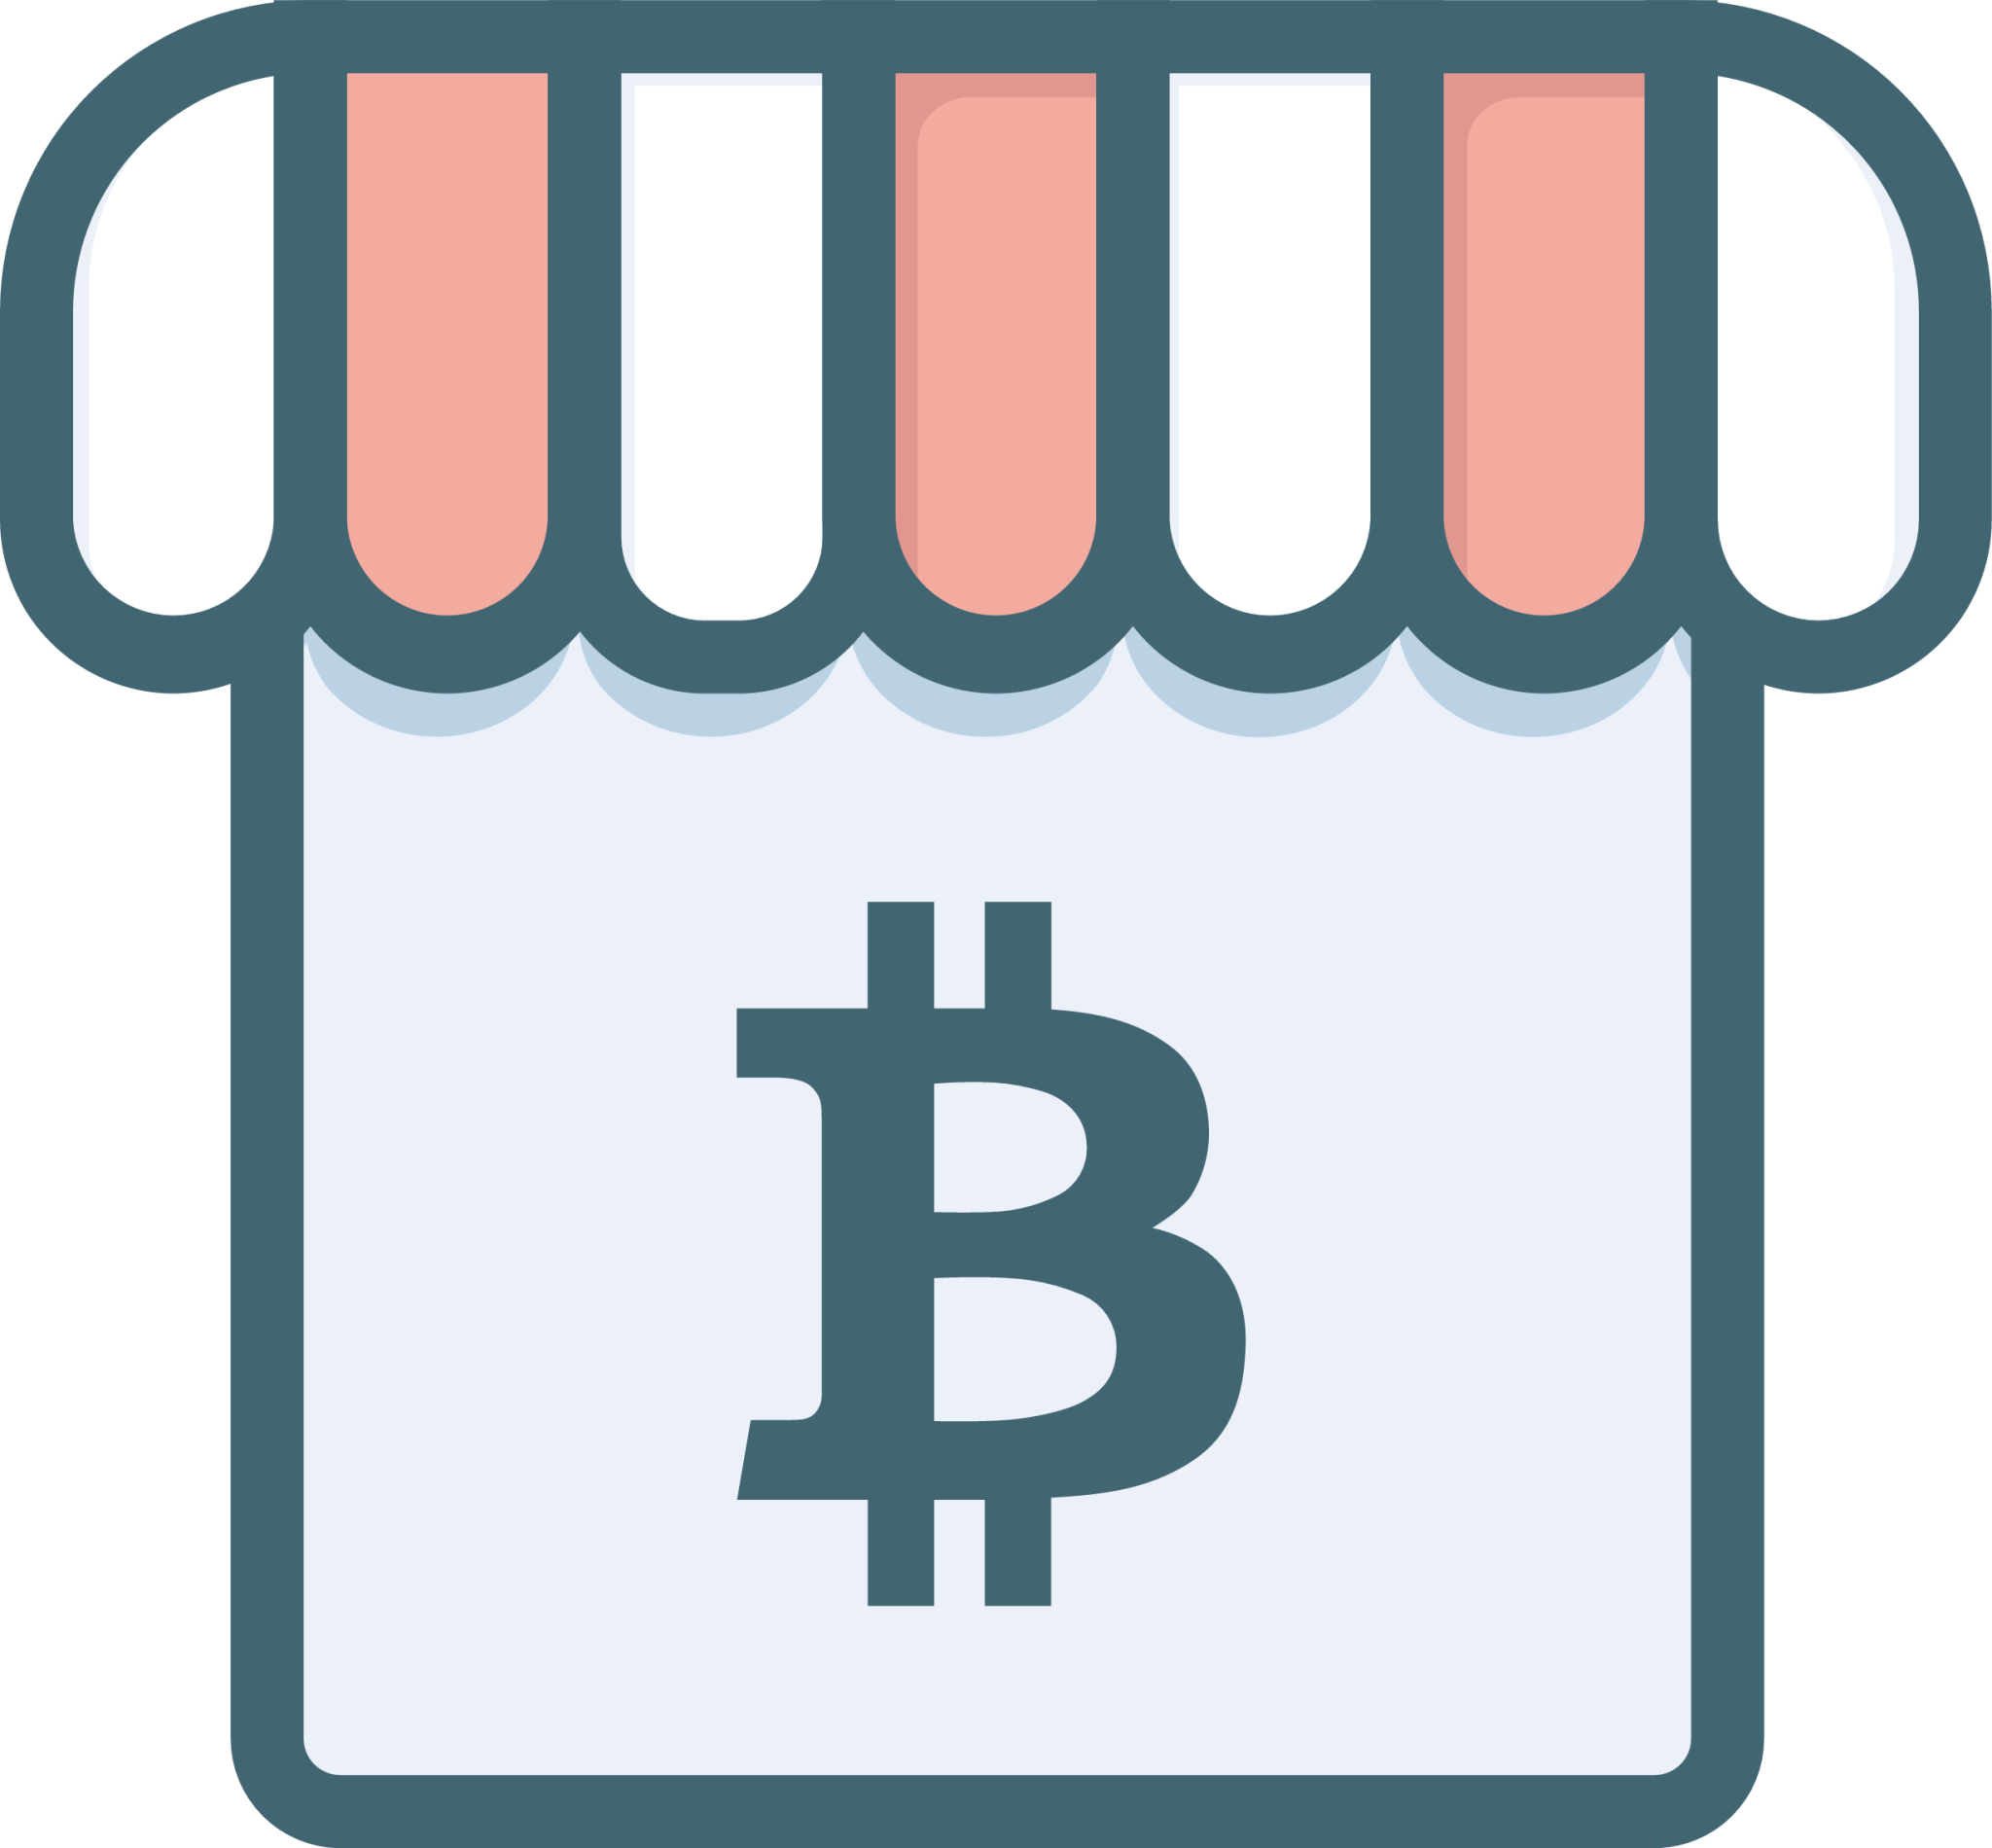 bitcoin shop illustration